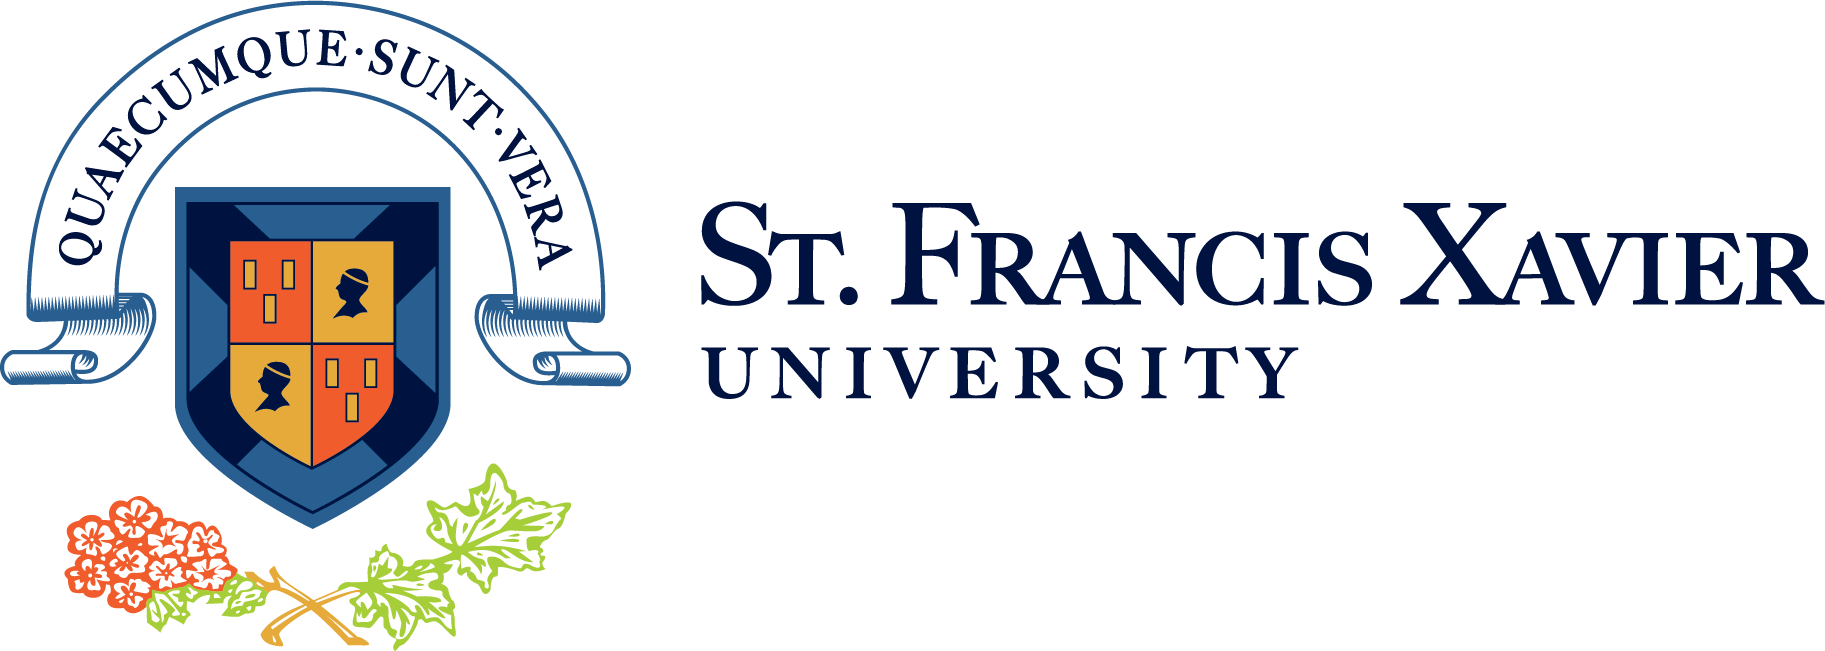 St. Francis Xavier University